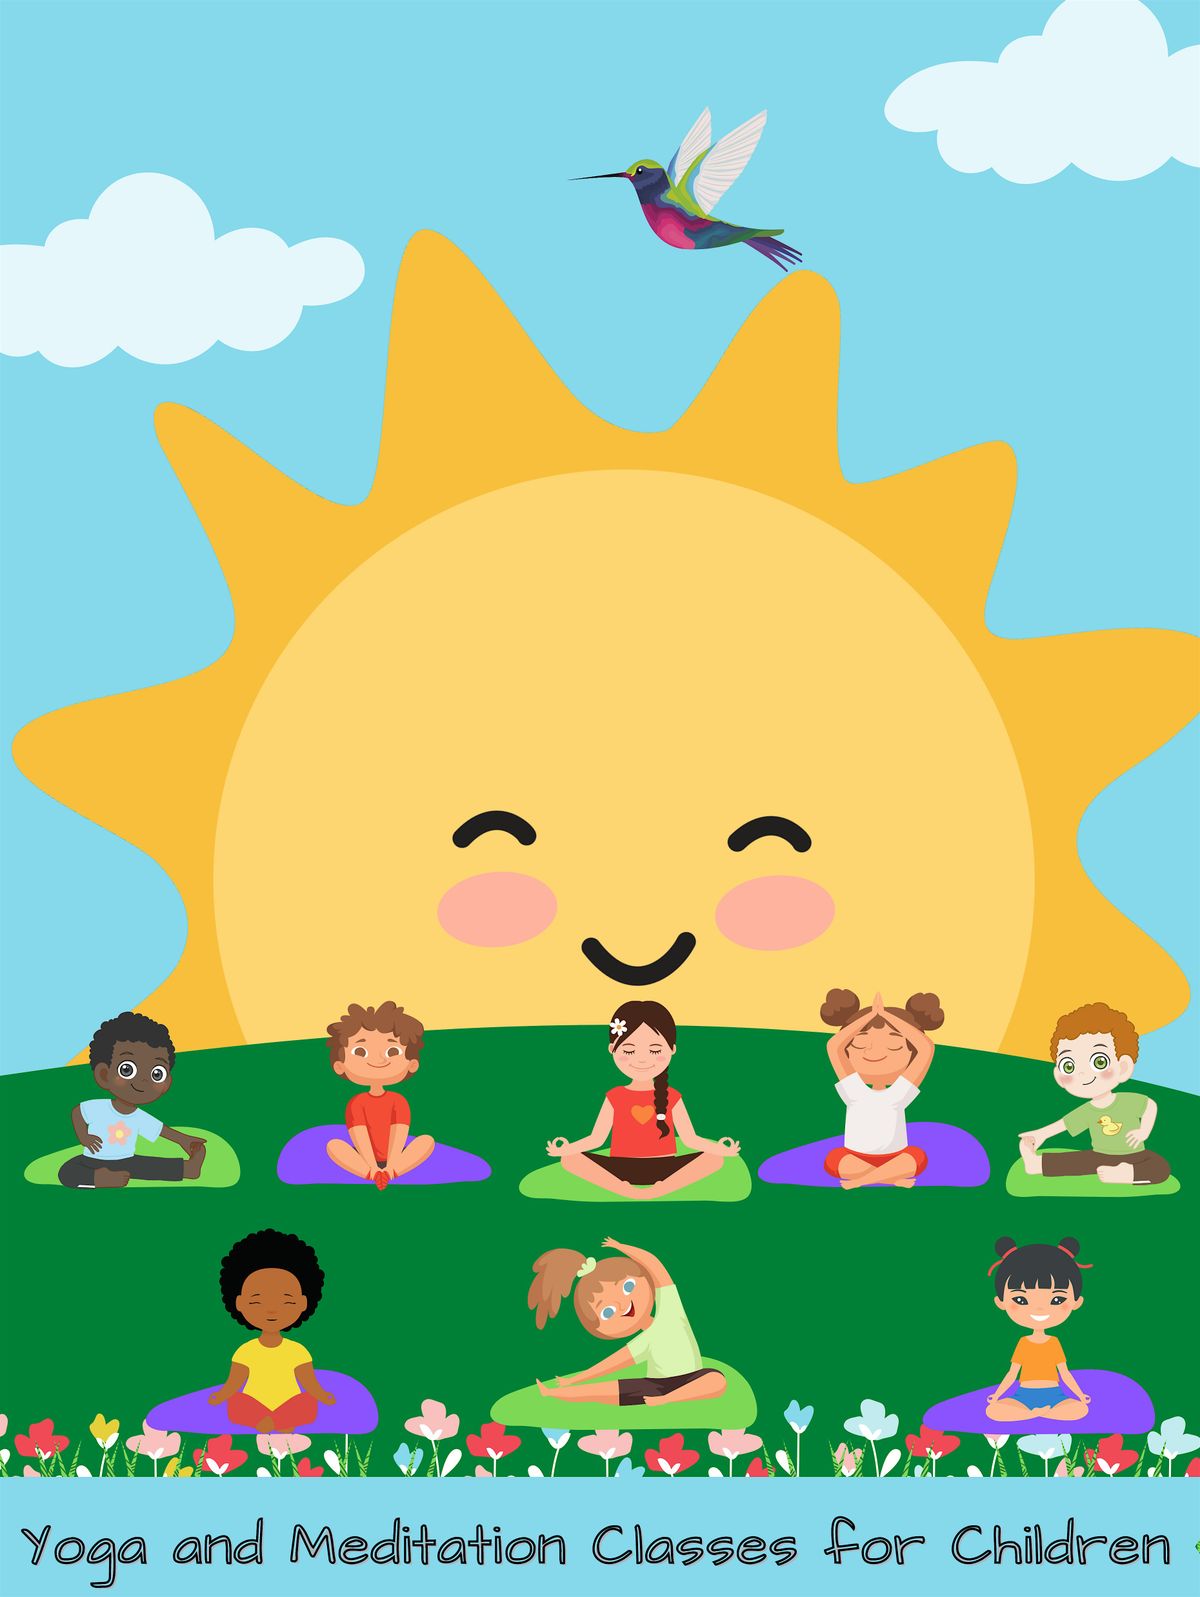 Yoga and Meditation for Children